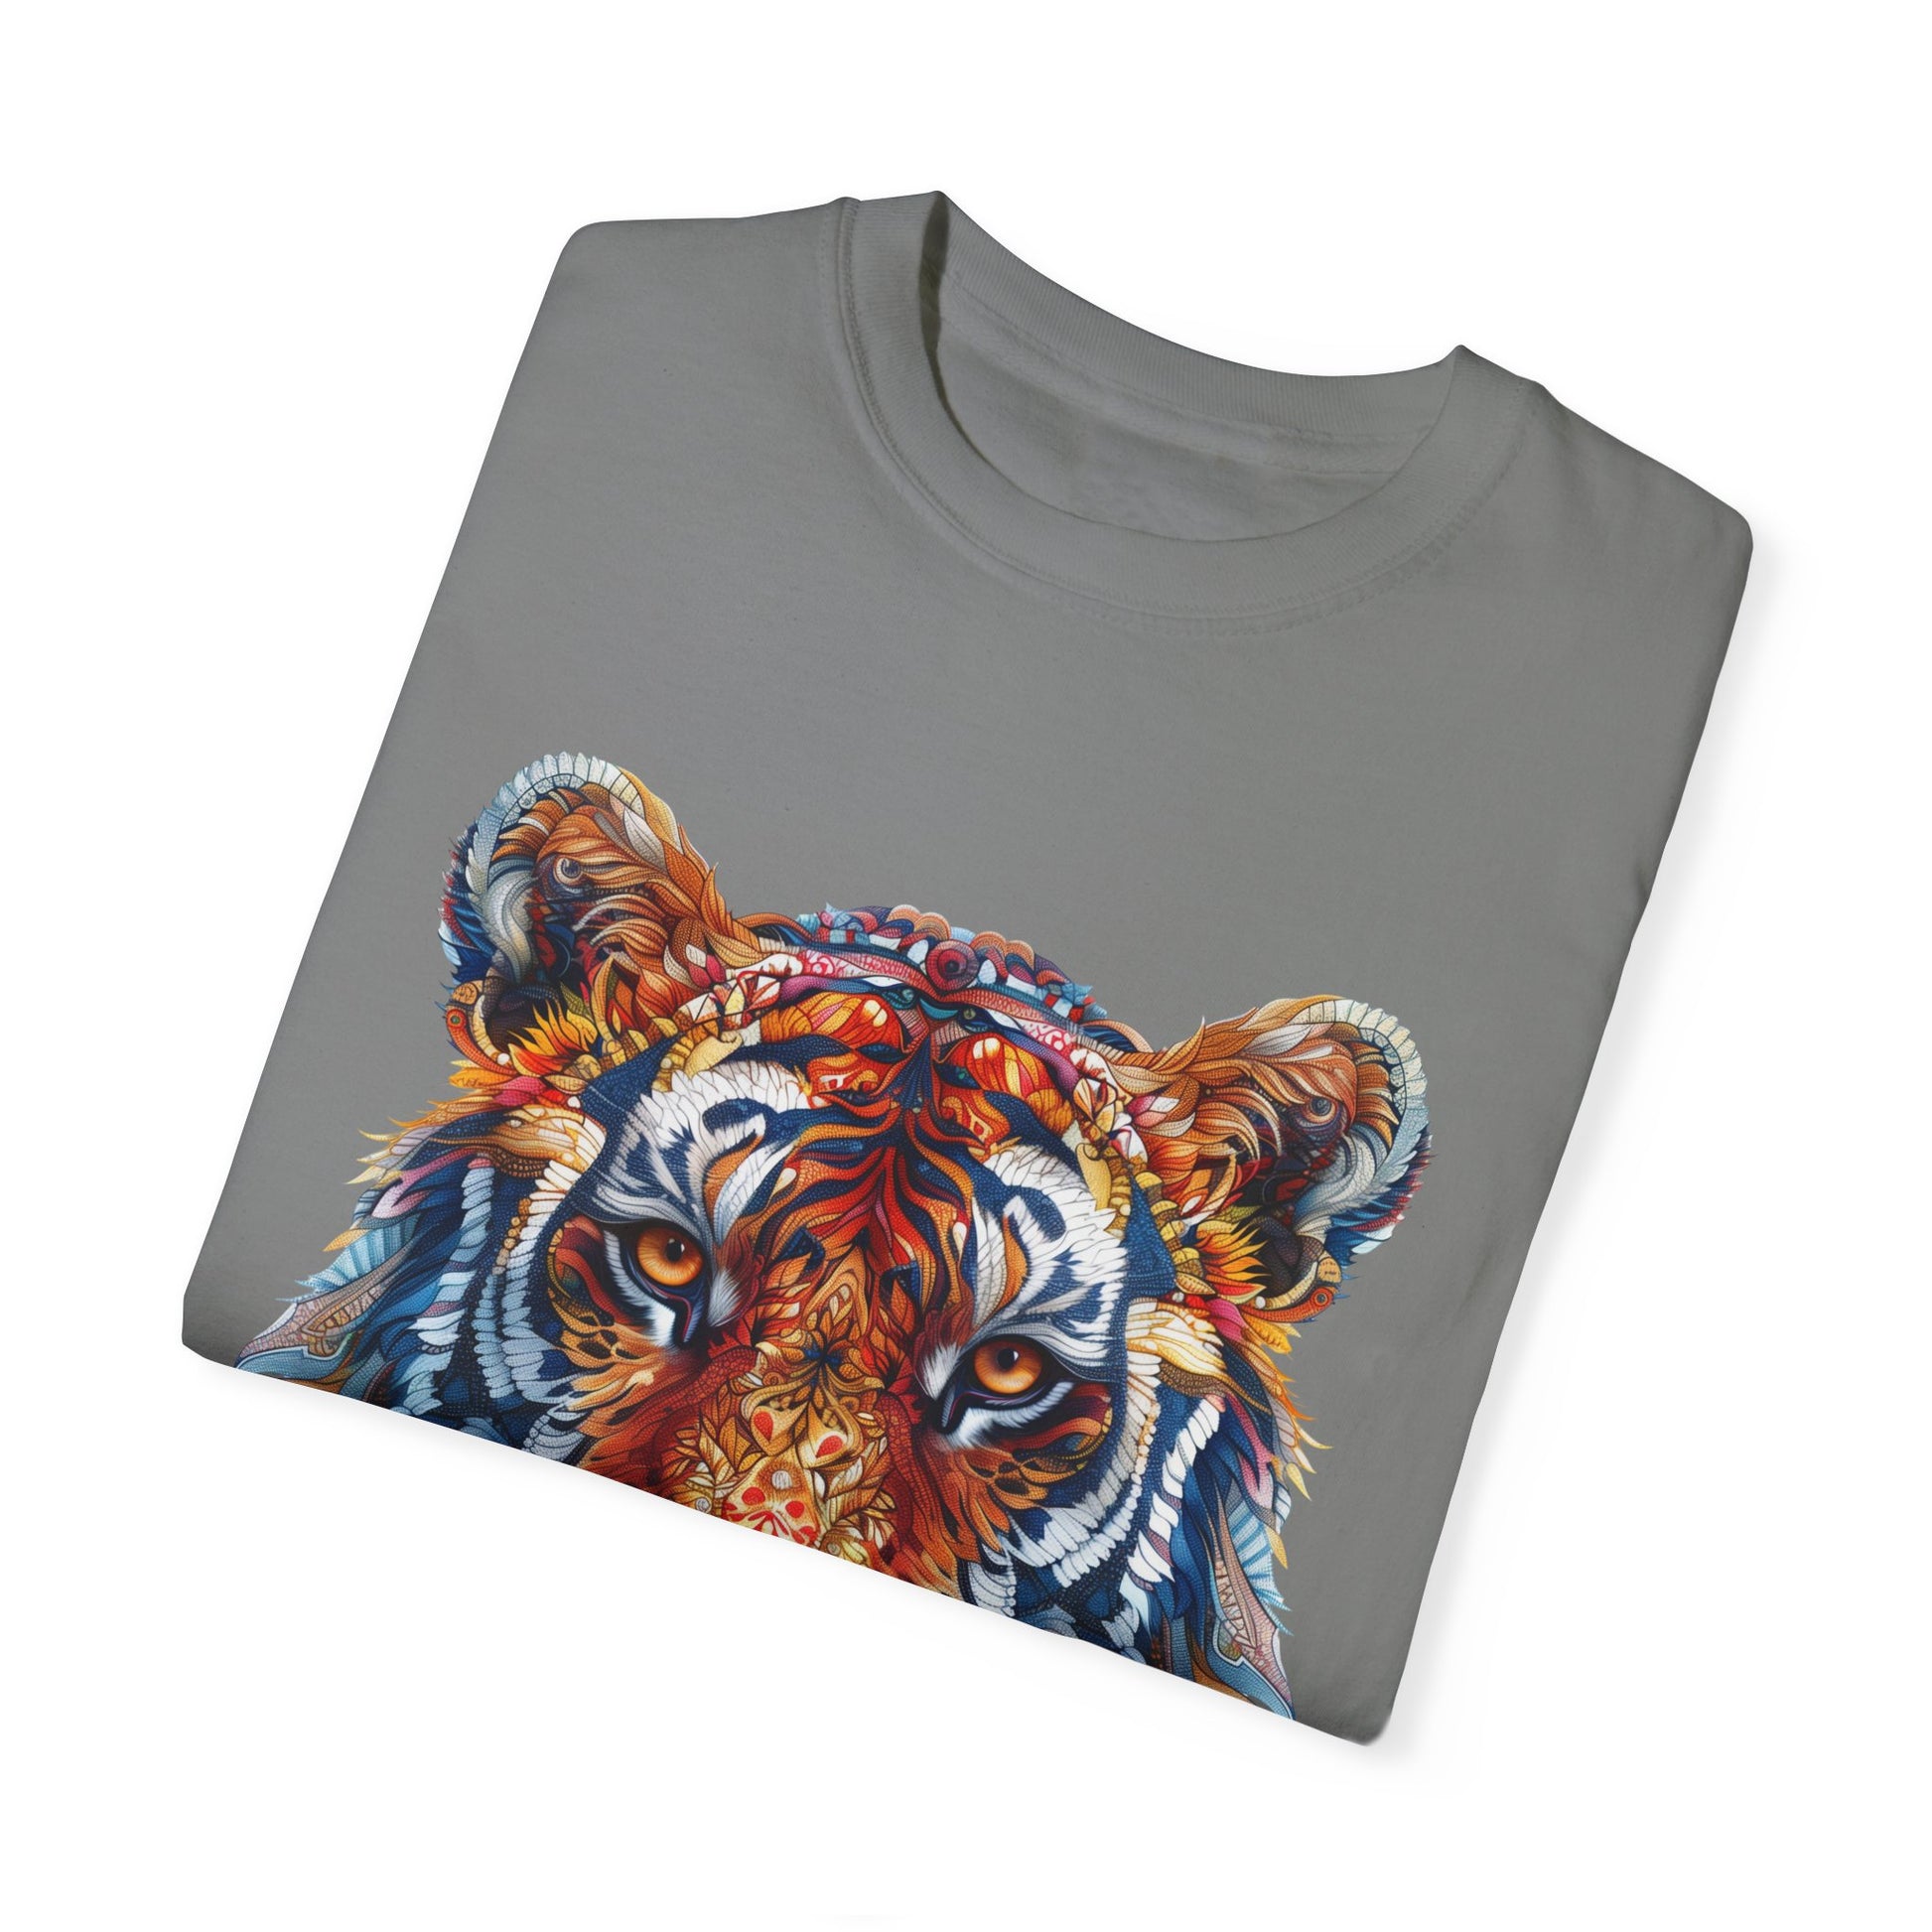 Lion Head Cool Graphic Design Novelty Unisex Garment-dyed T-shirt Cotton Funny Humorous Graphic Soft Premium Unisex Men Women Grey T-shirt Birthday Gift-41